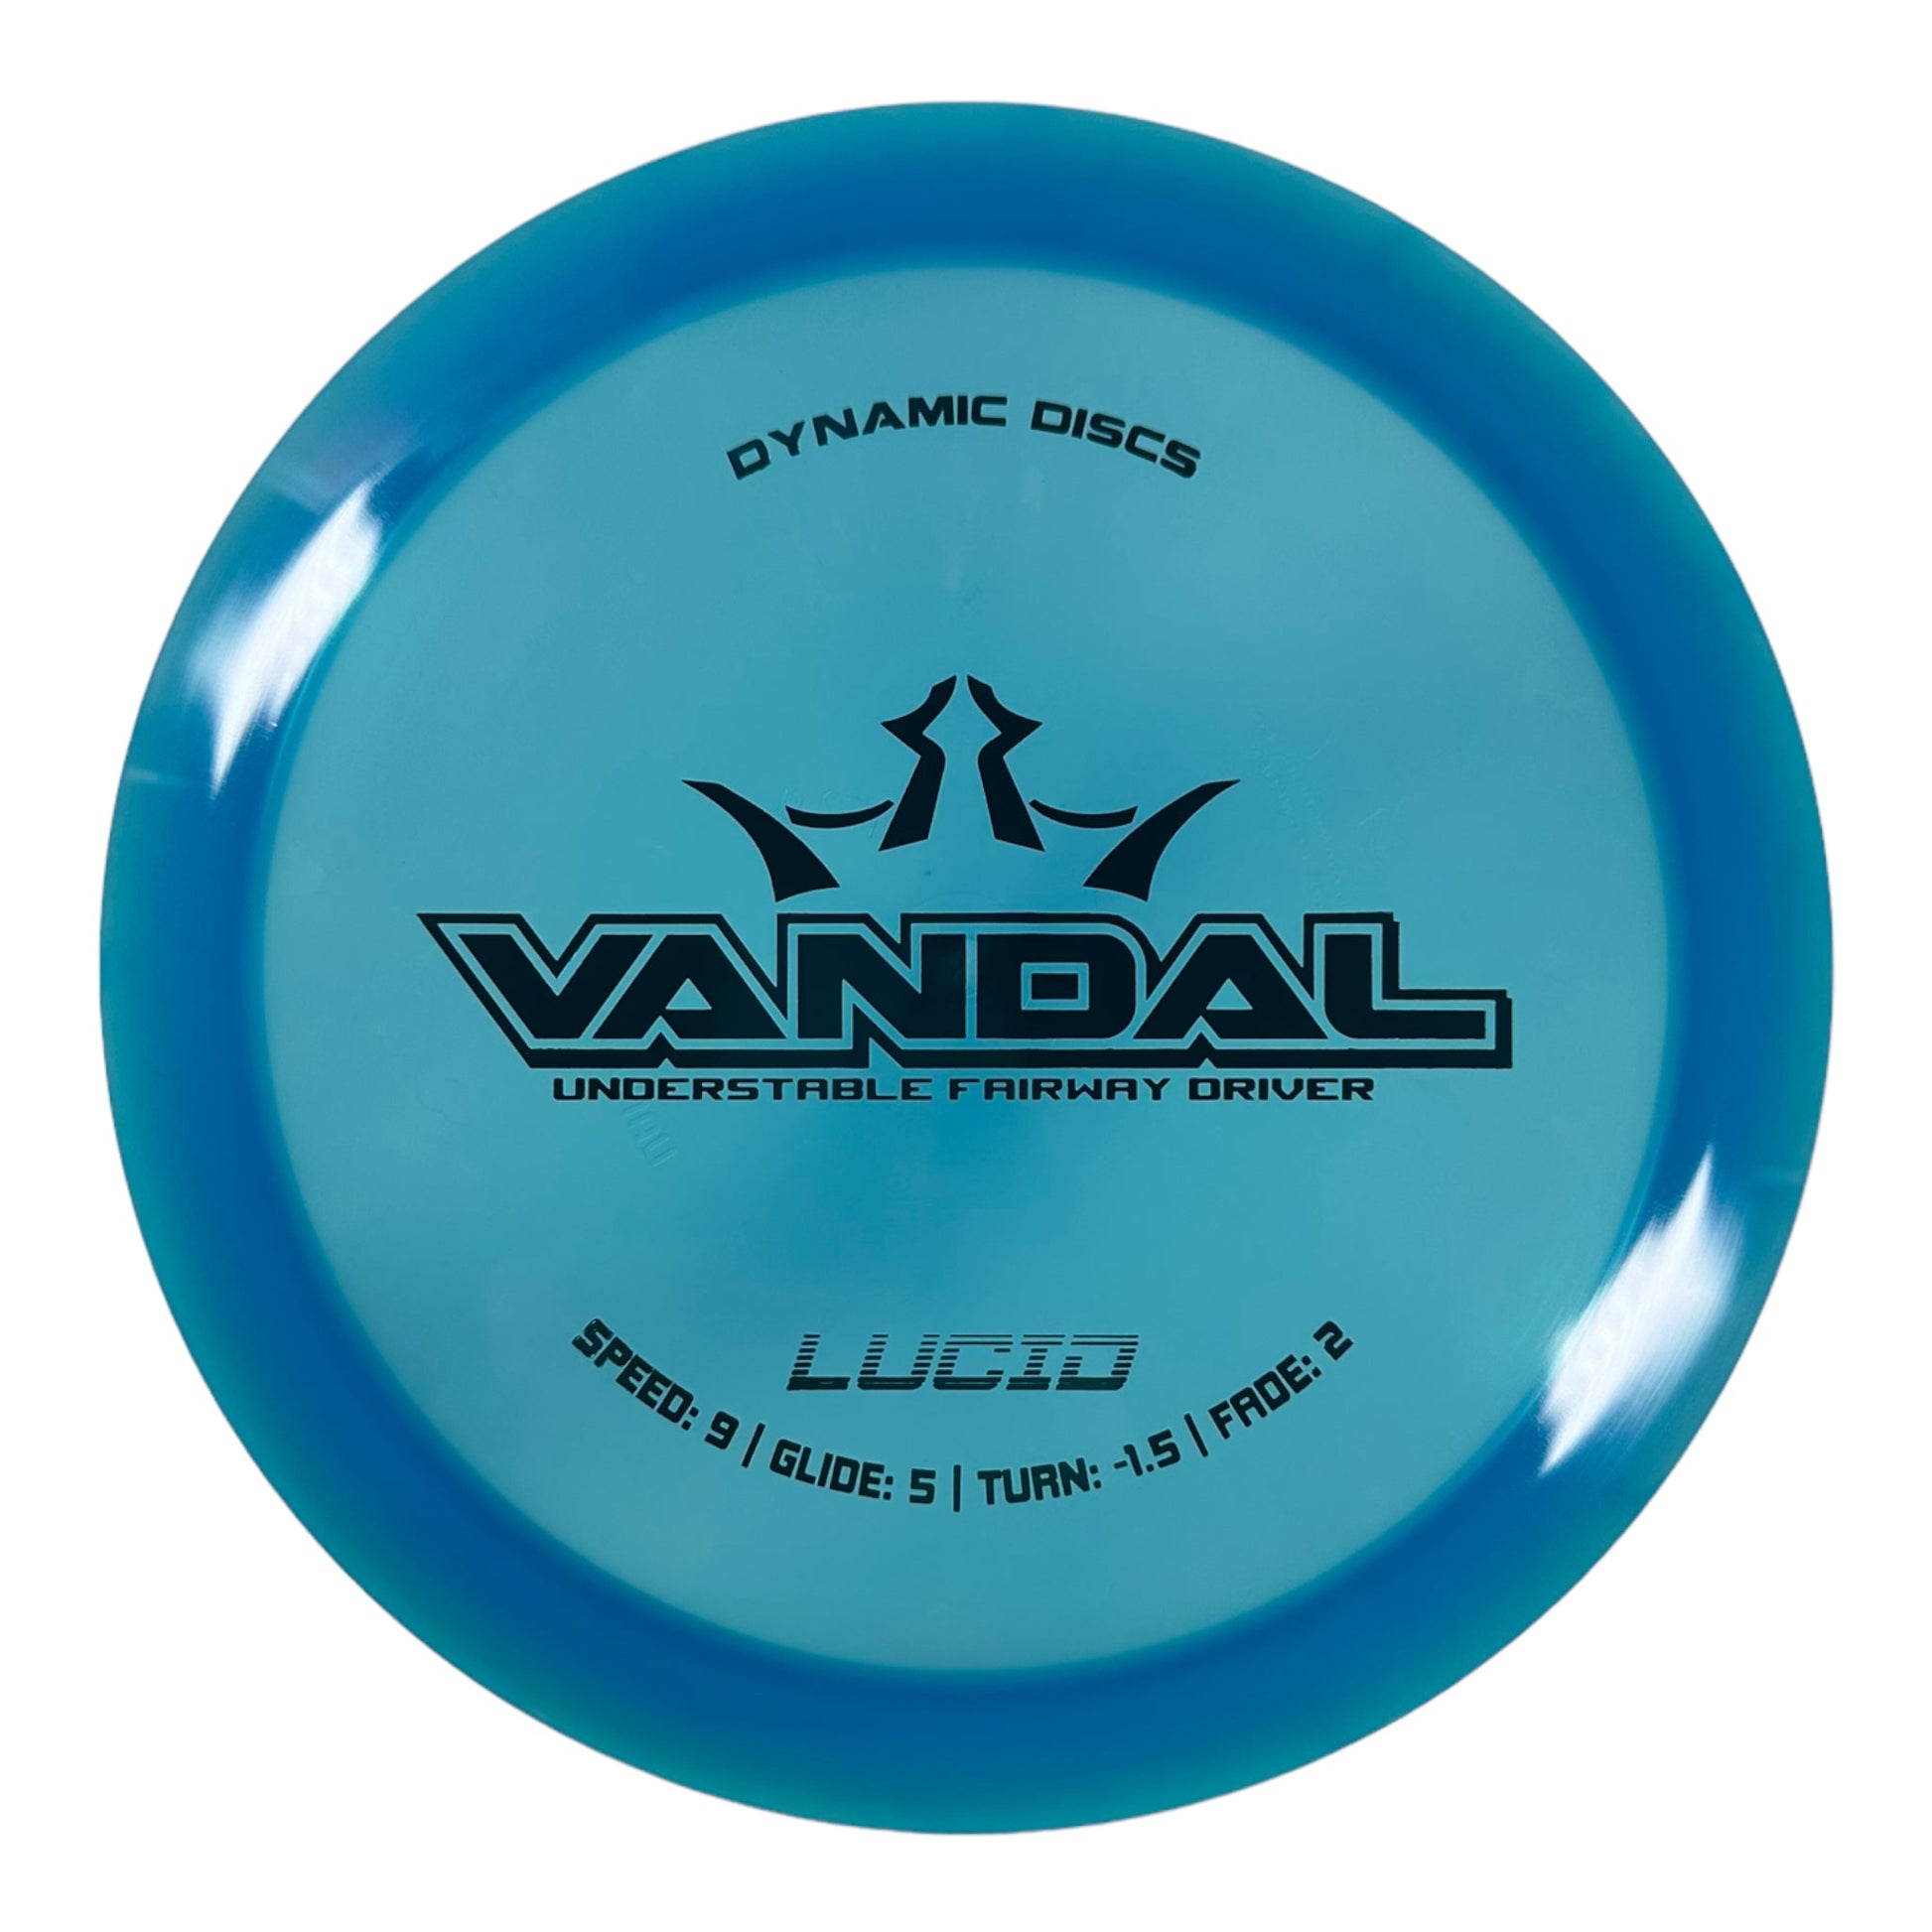 Dynamic Discs Vandal | Lucid | Blue/Blue 172-174g Disc Golf